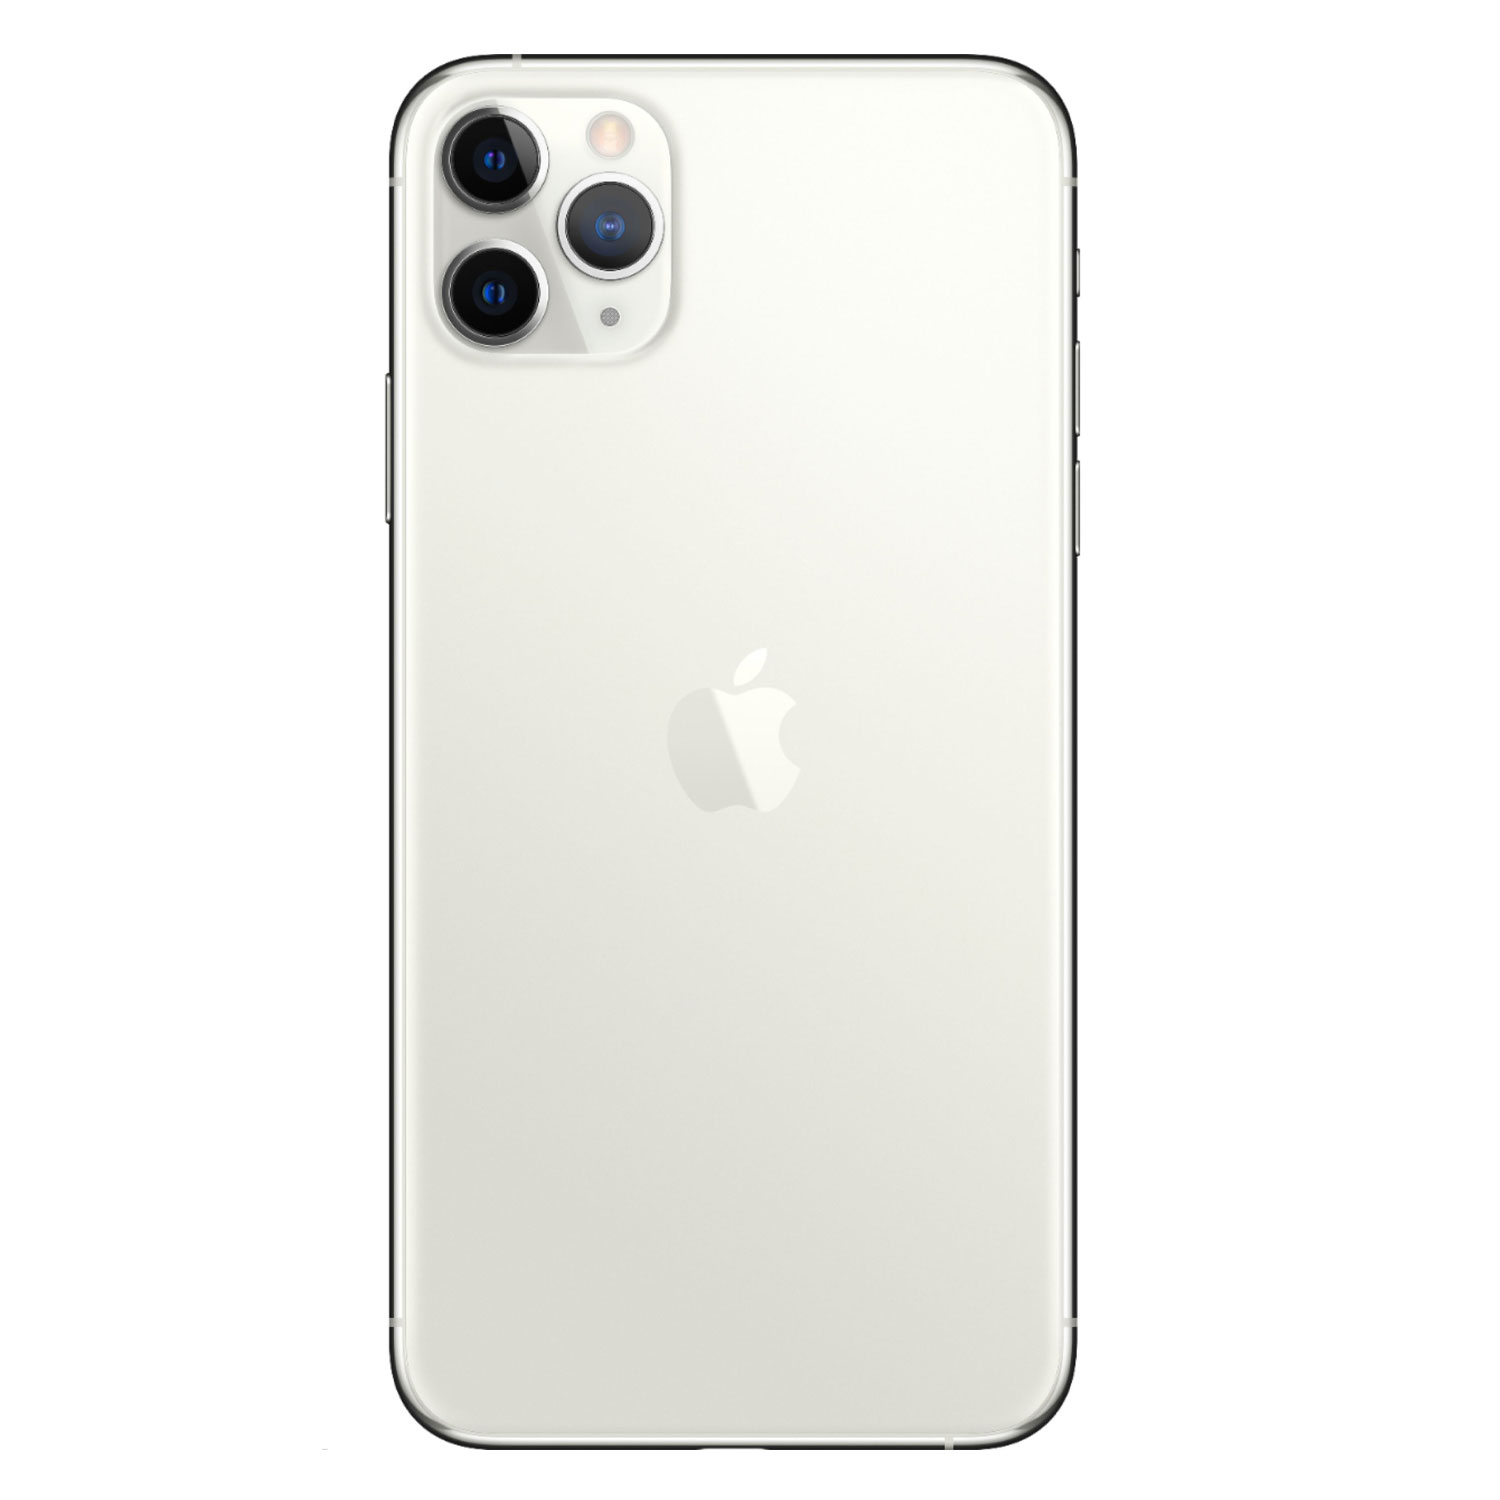 Apple iPhone 11 Pro *Swap A* A2215/2160 256GB 4GB RAM Tela 5.8" - Branco (Somente Aparelho)